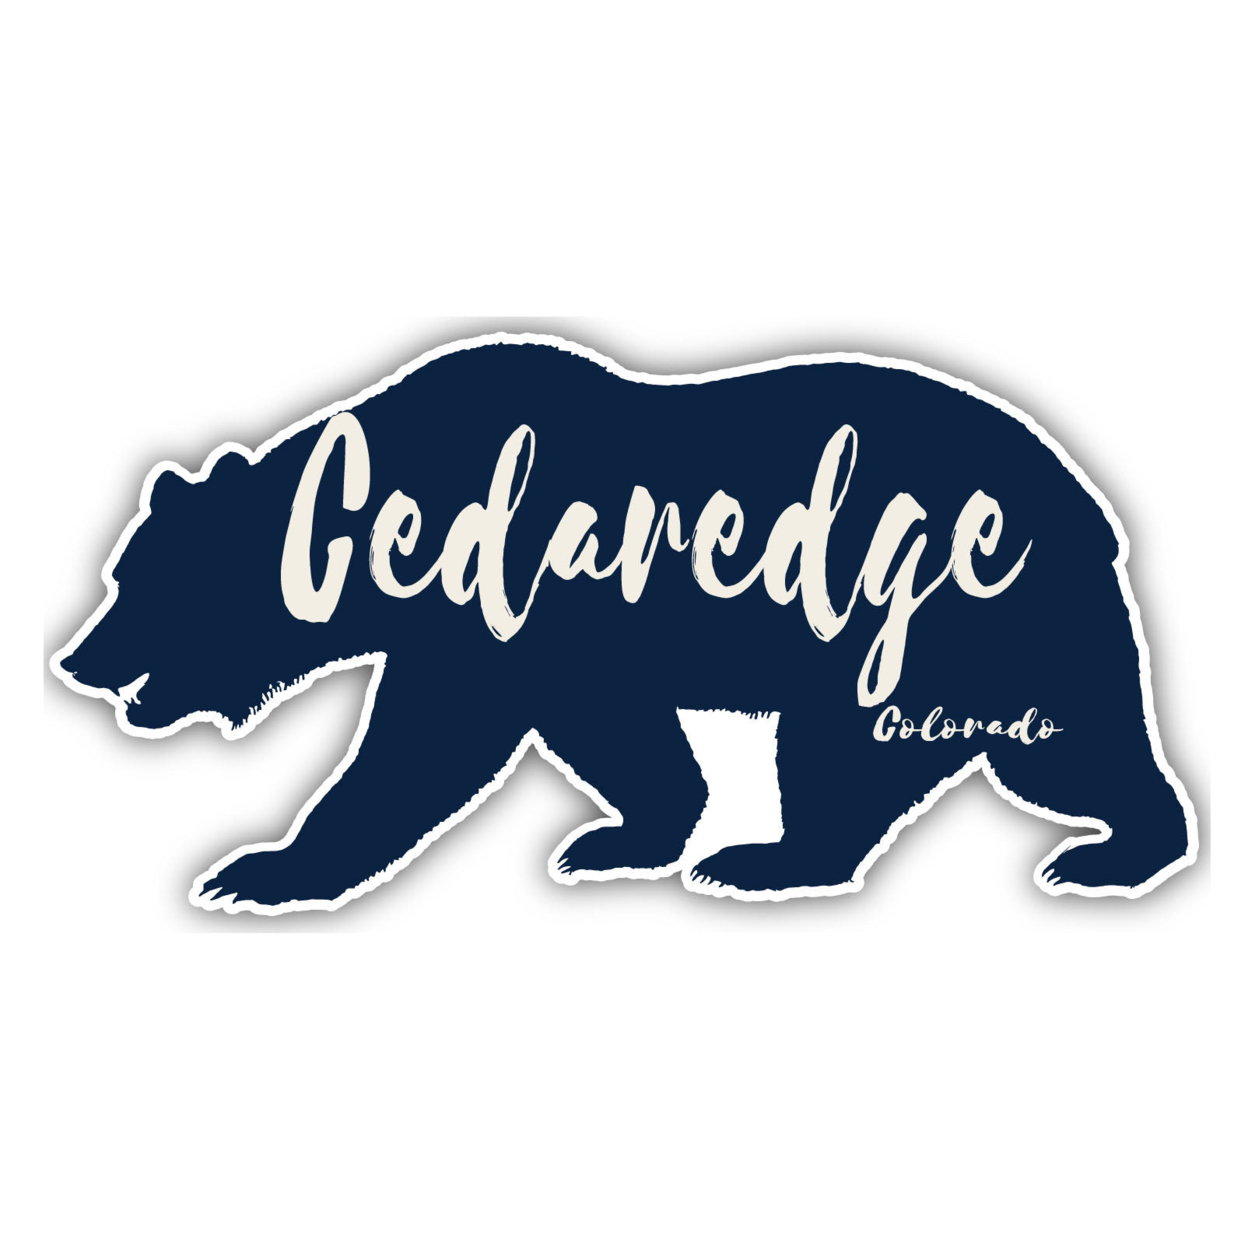 Cedaredge Colorado Souvenir Decorative Stickers (Choose Theme And Size) - 4-Pack, 12-Inch, Bear